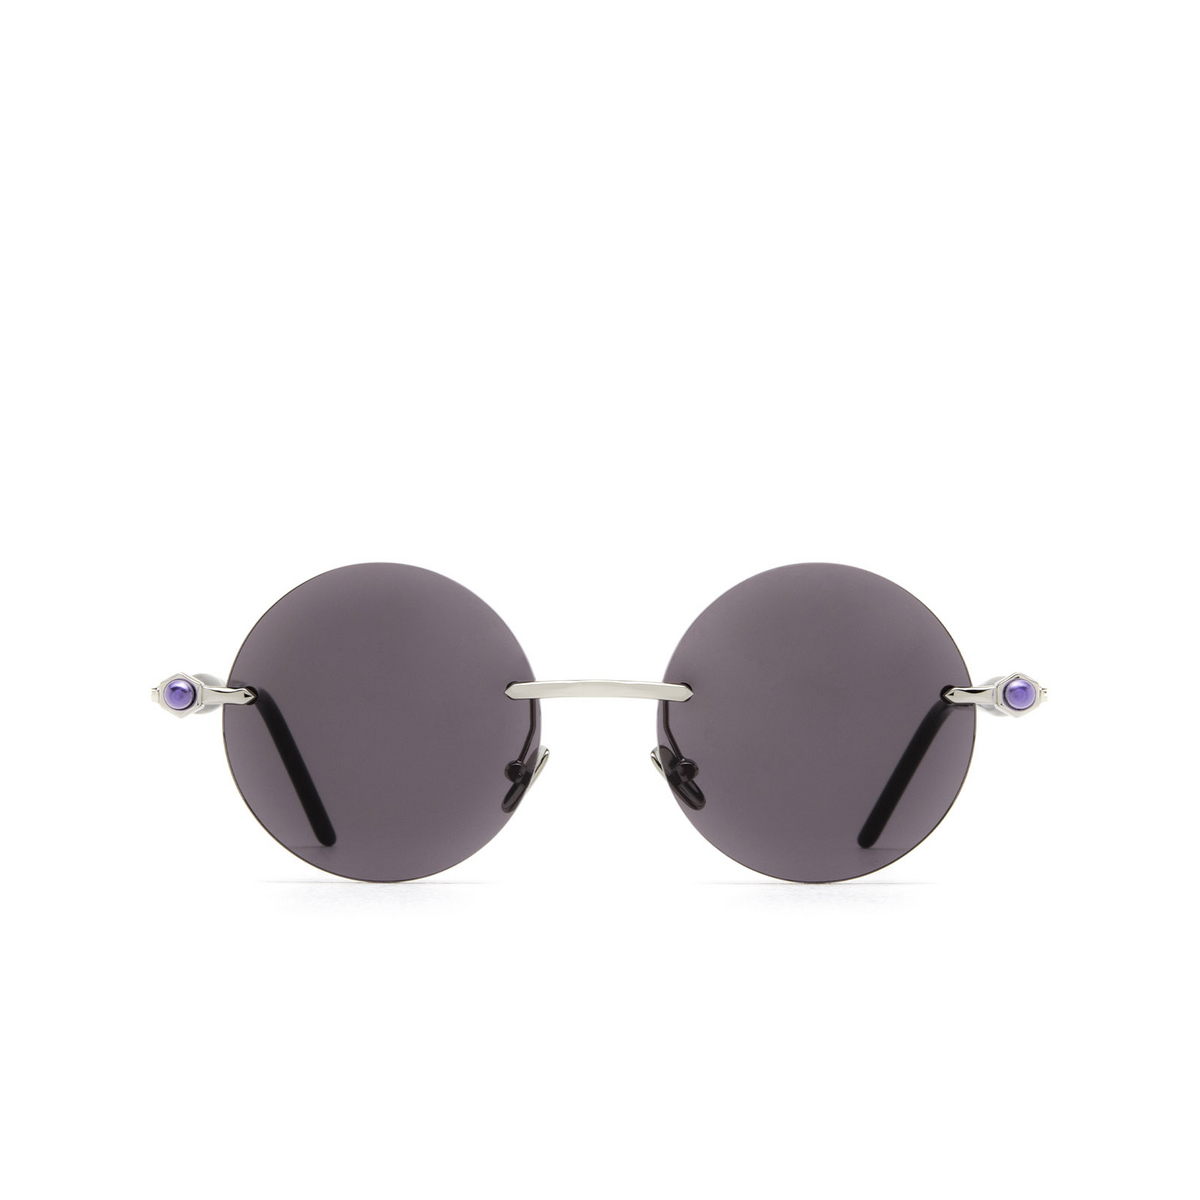 Kuboraum® Round Sunglasses: P50 color Si Vb Silver & Black Matt Black Shine - front view